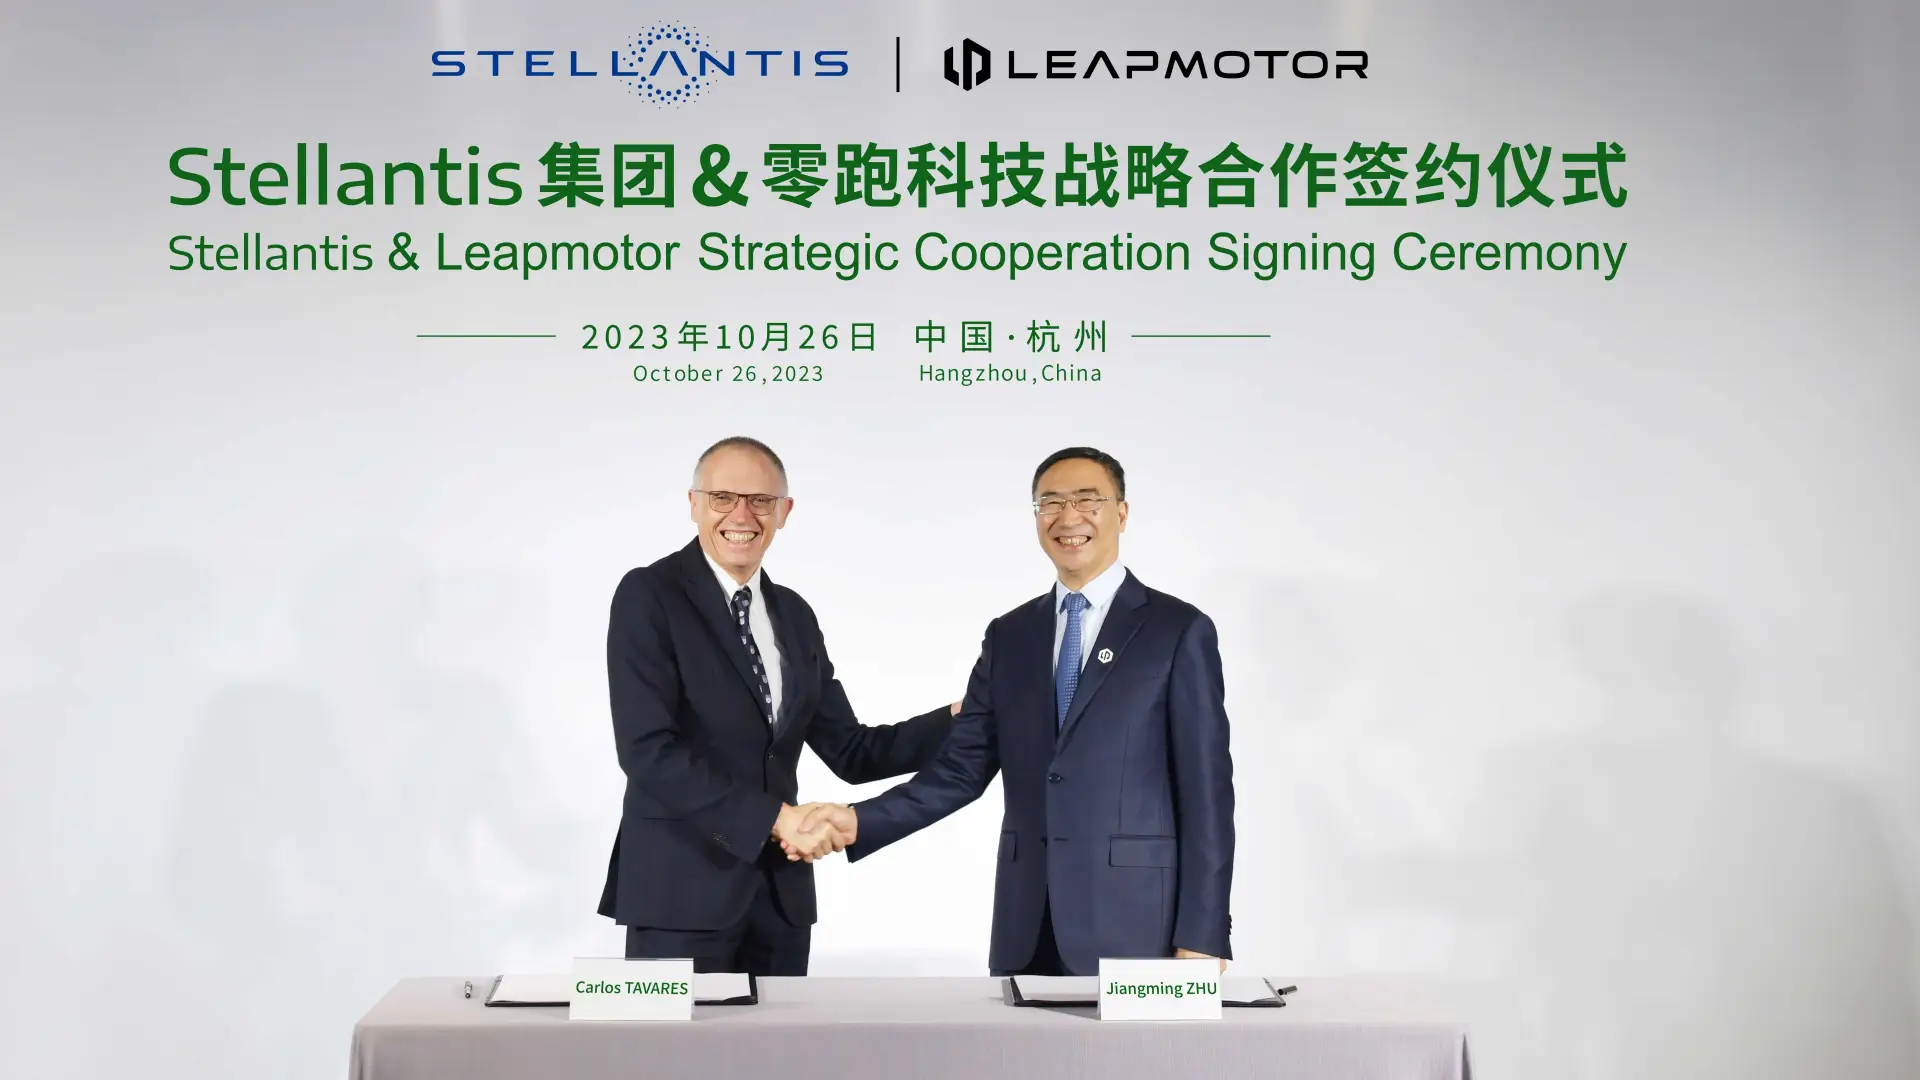 Stellantis invests leapmotors